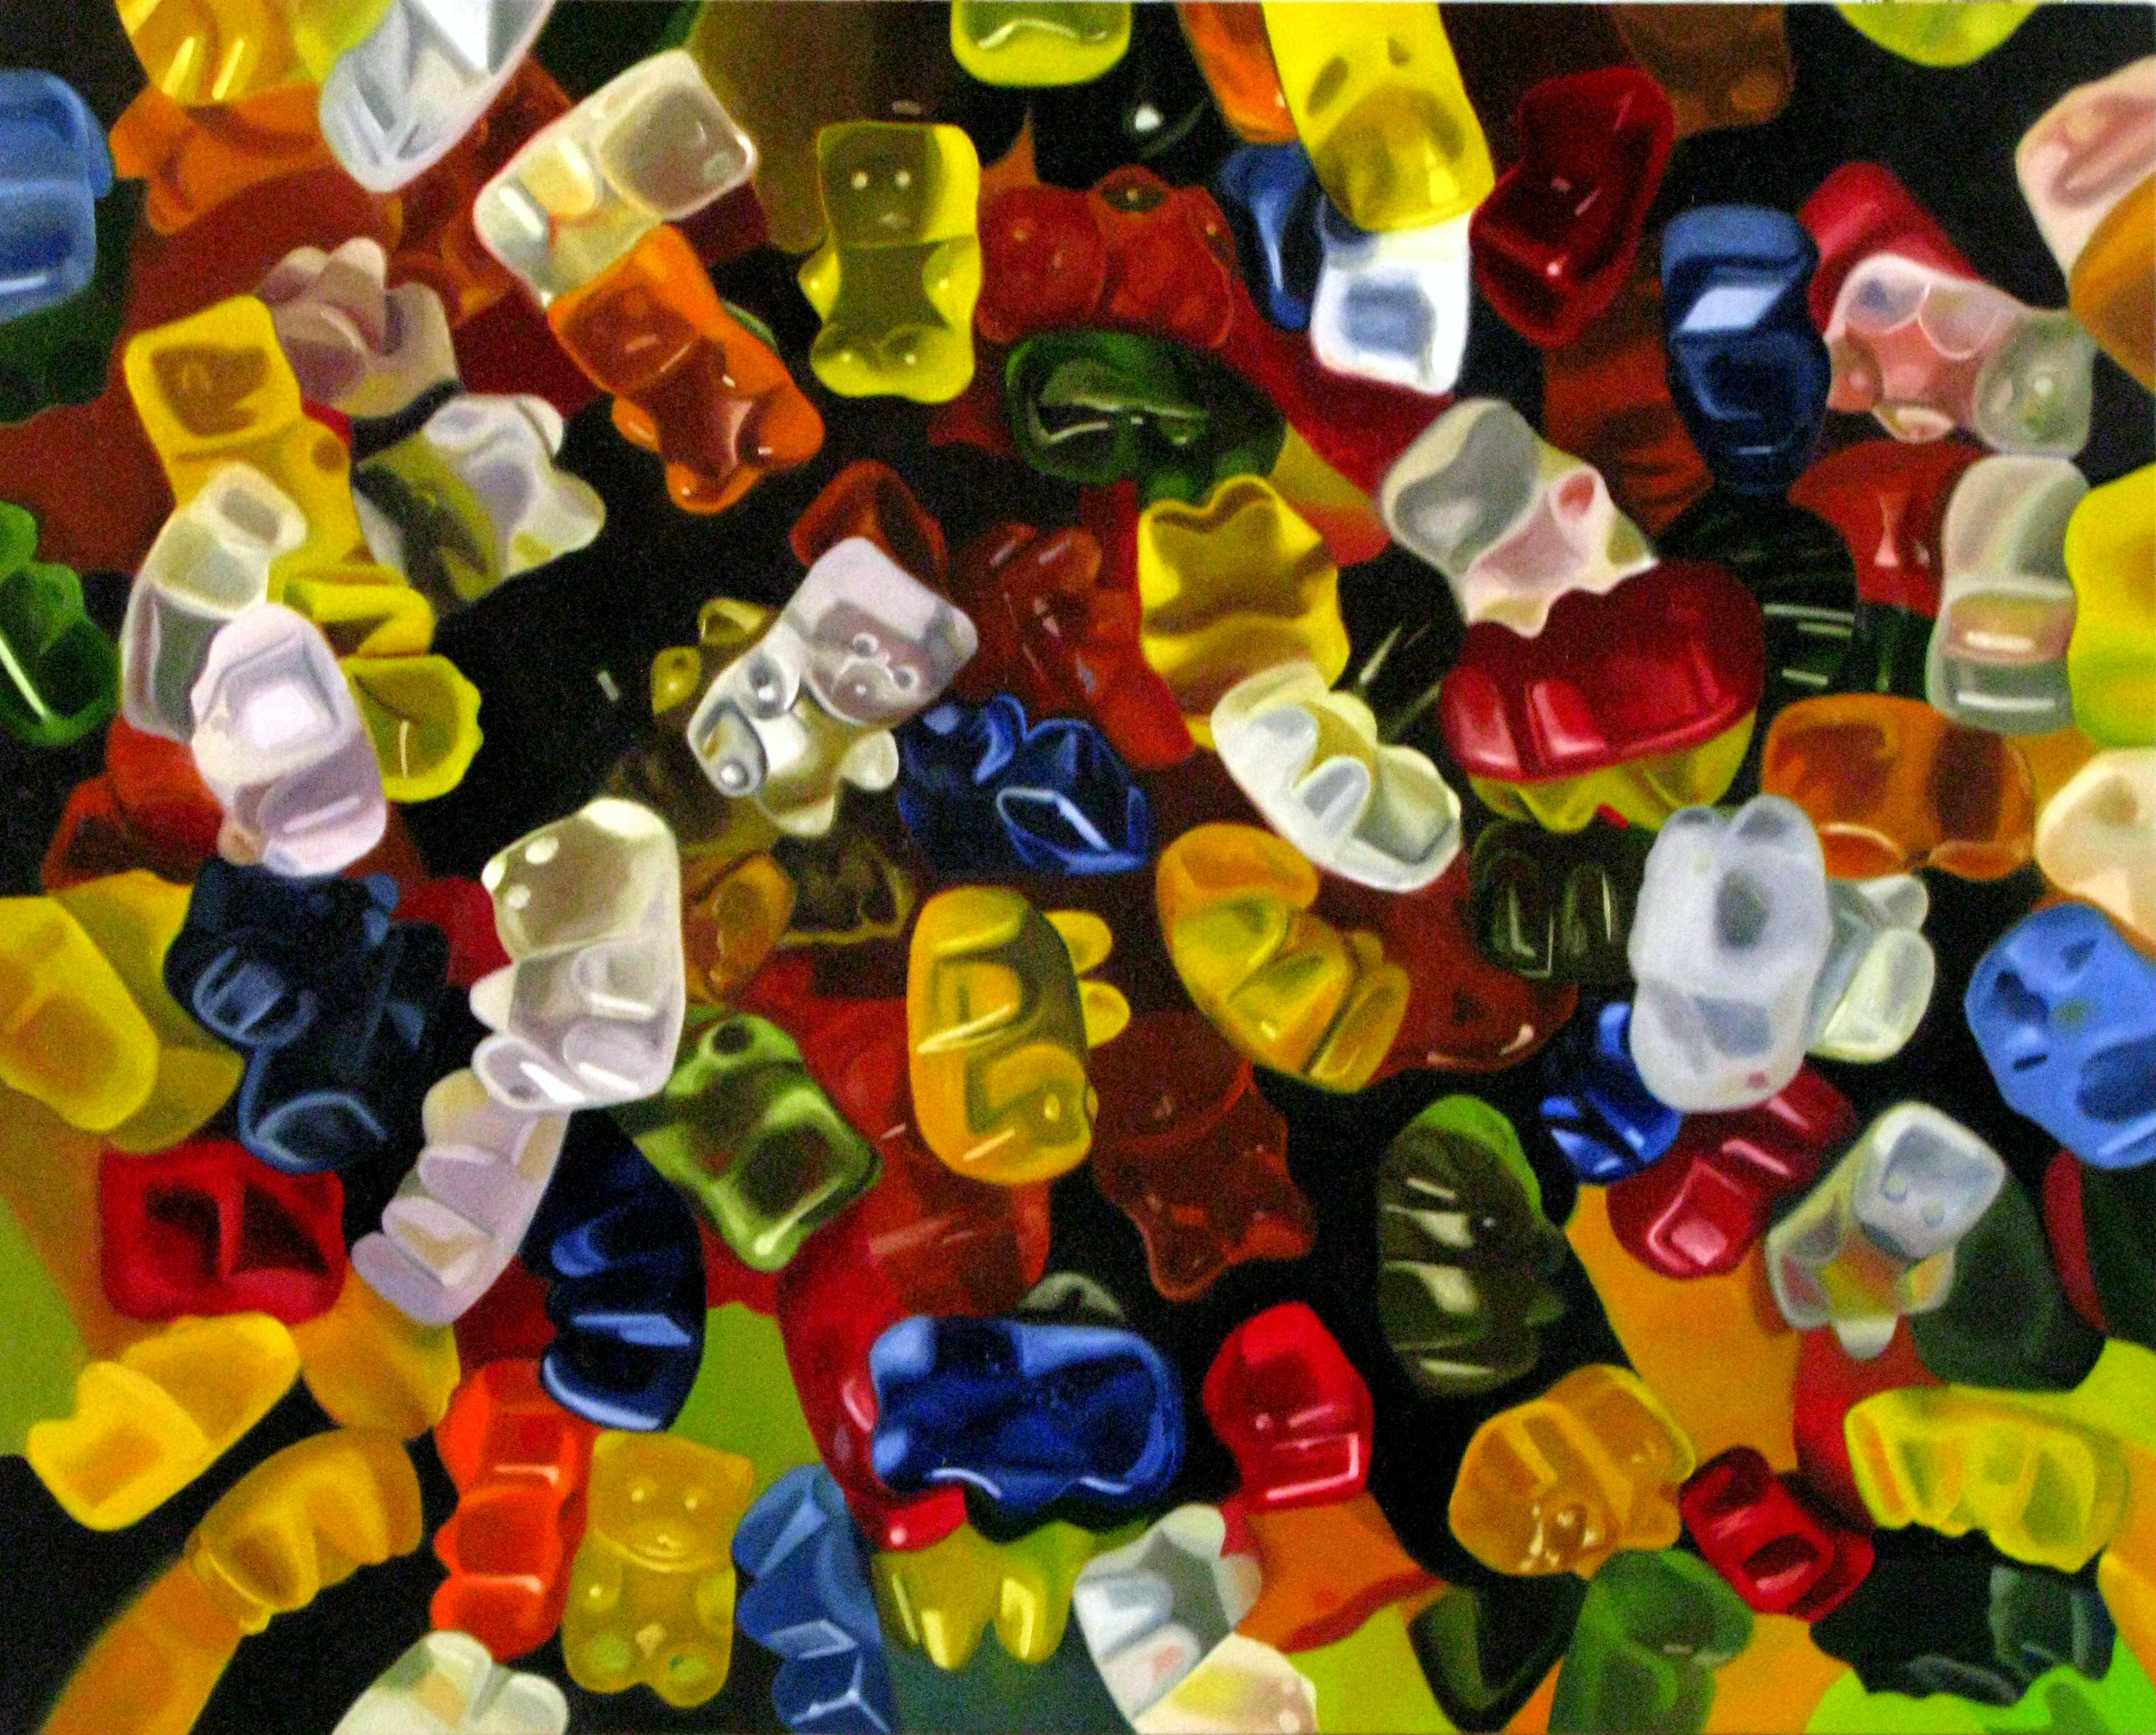 Still life with gummy bears